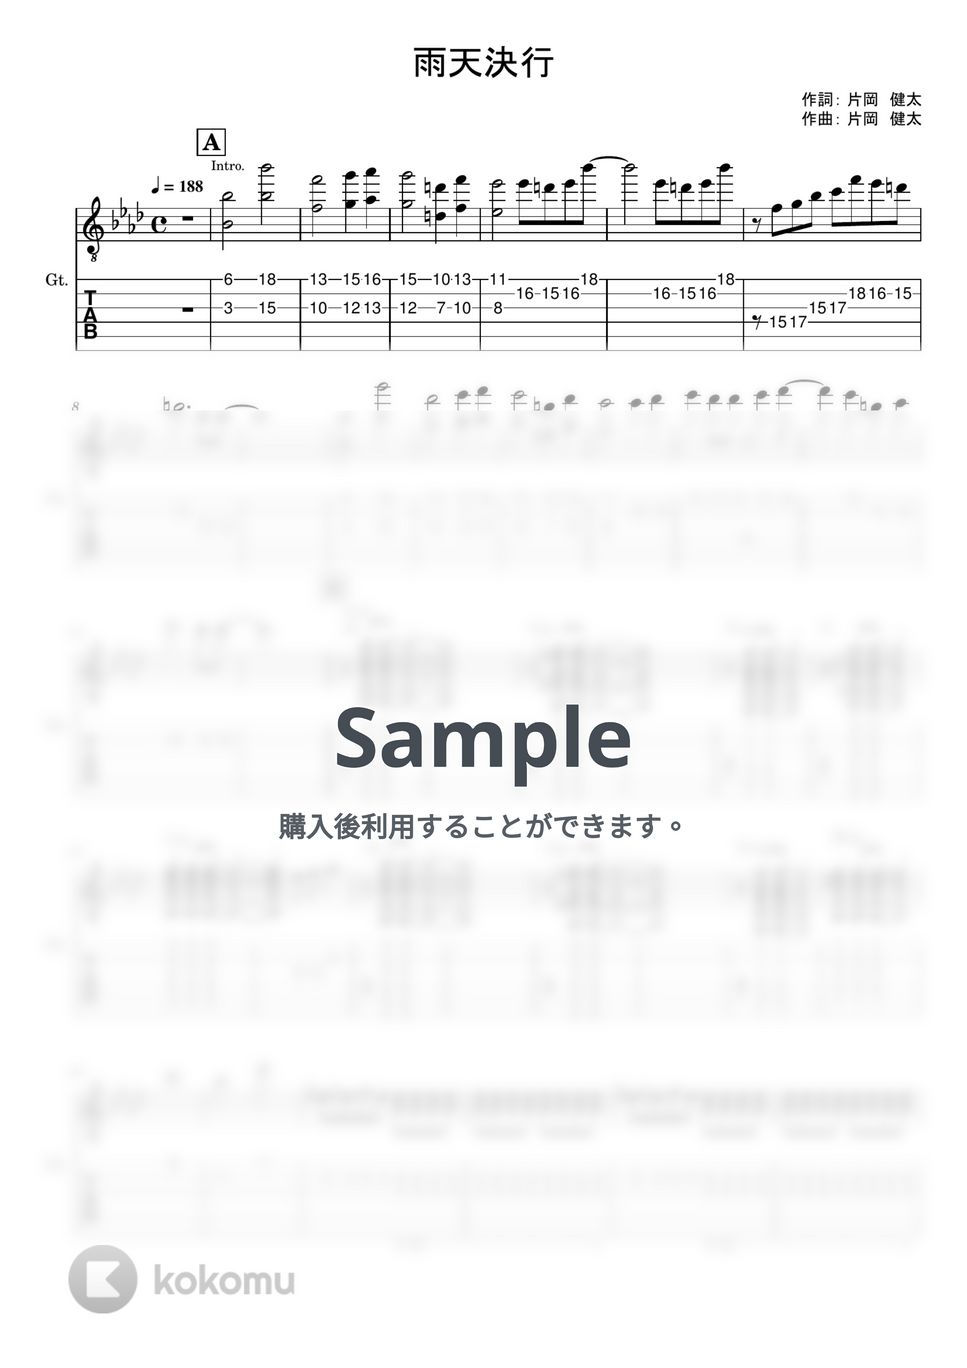 sumika - 雨天決行 (ギターTAB譜) by やまさんルーム